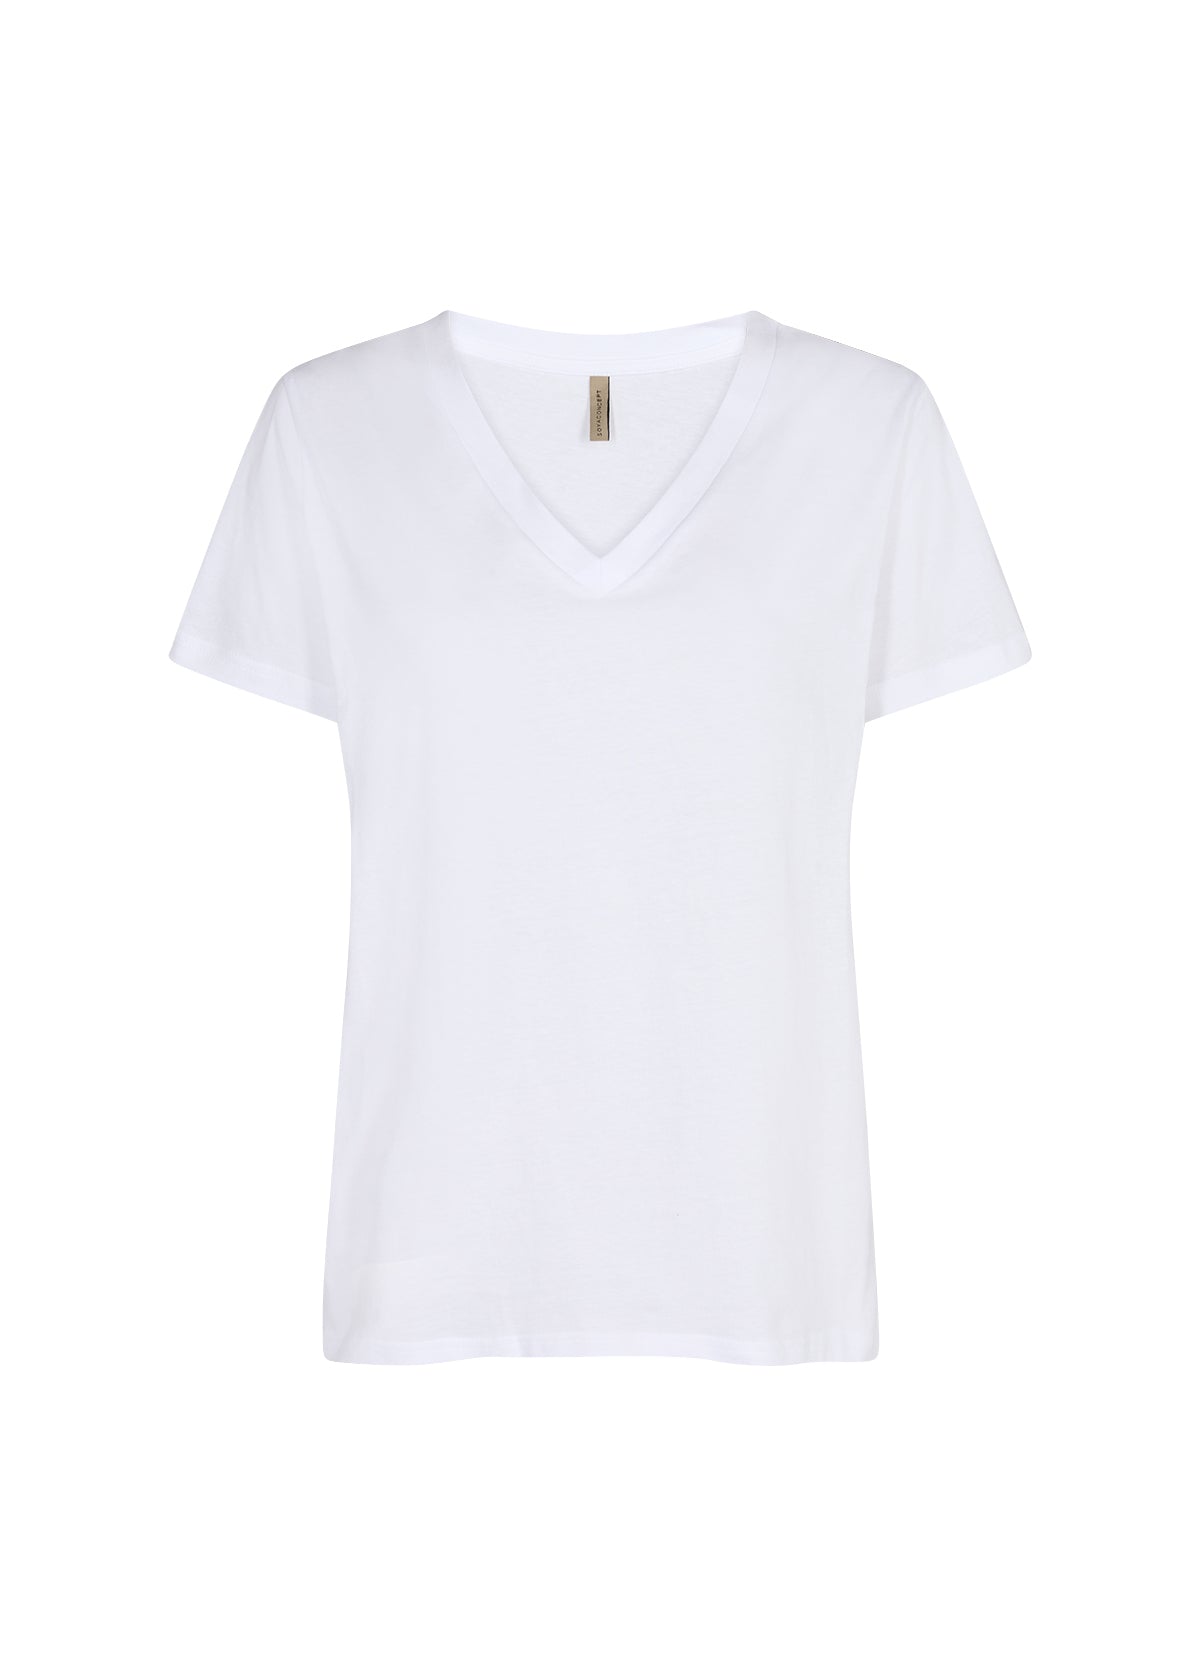 SOYA CONCEPT Derby Crisp White 100% Organic Cotton V Neck T-Shirt